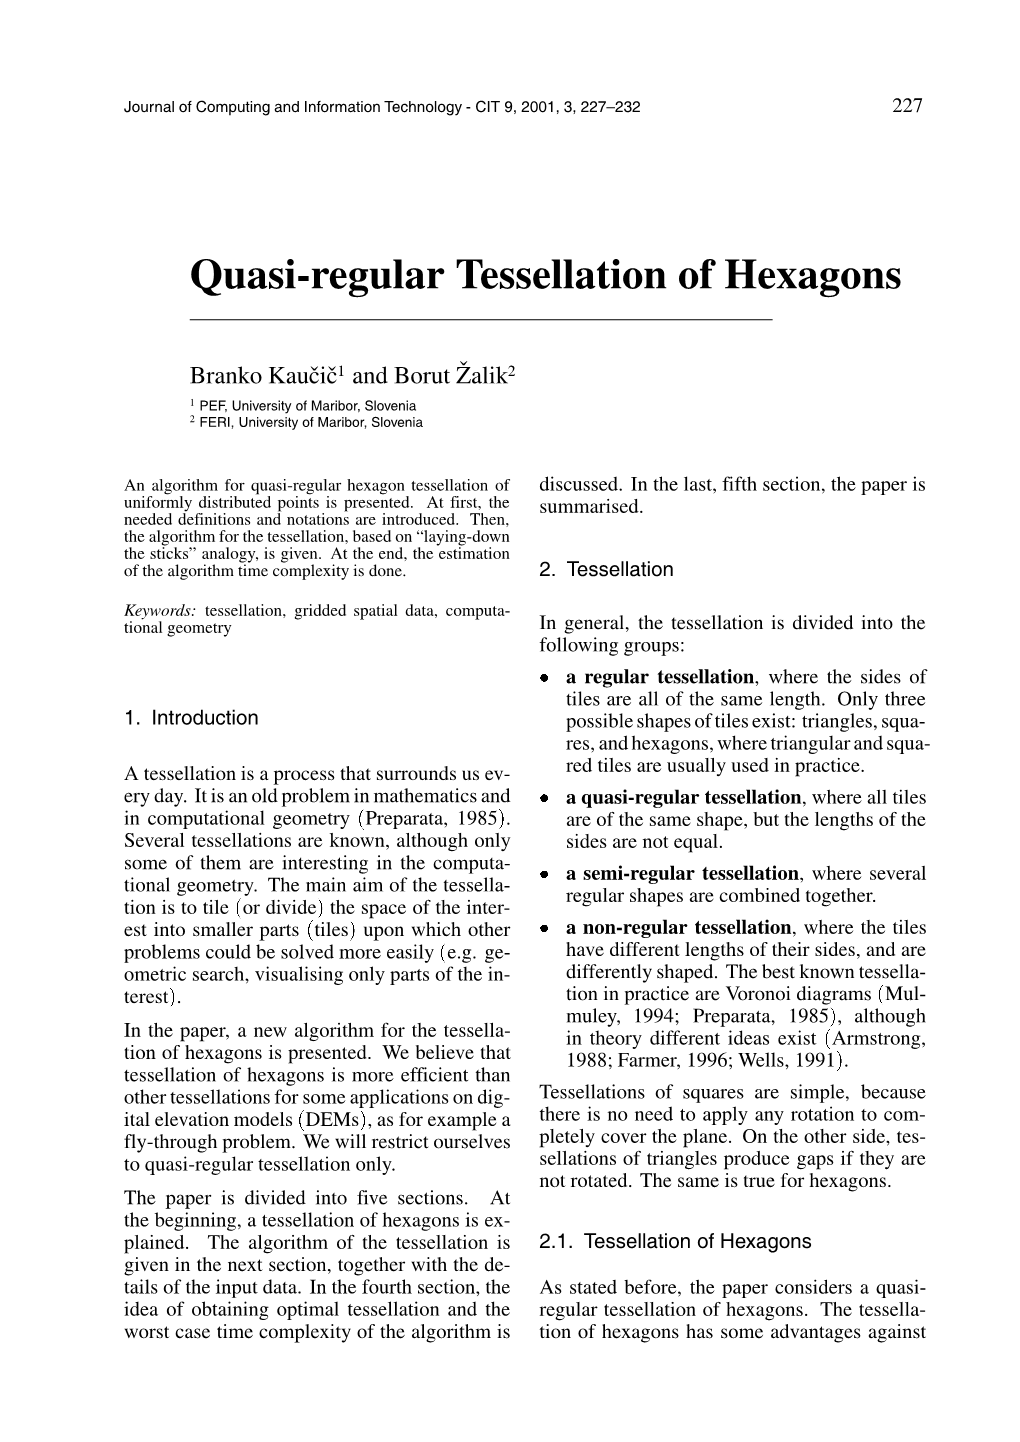 Quasi-Regular Tessellation of Hexagons